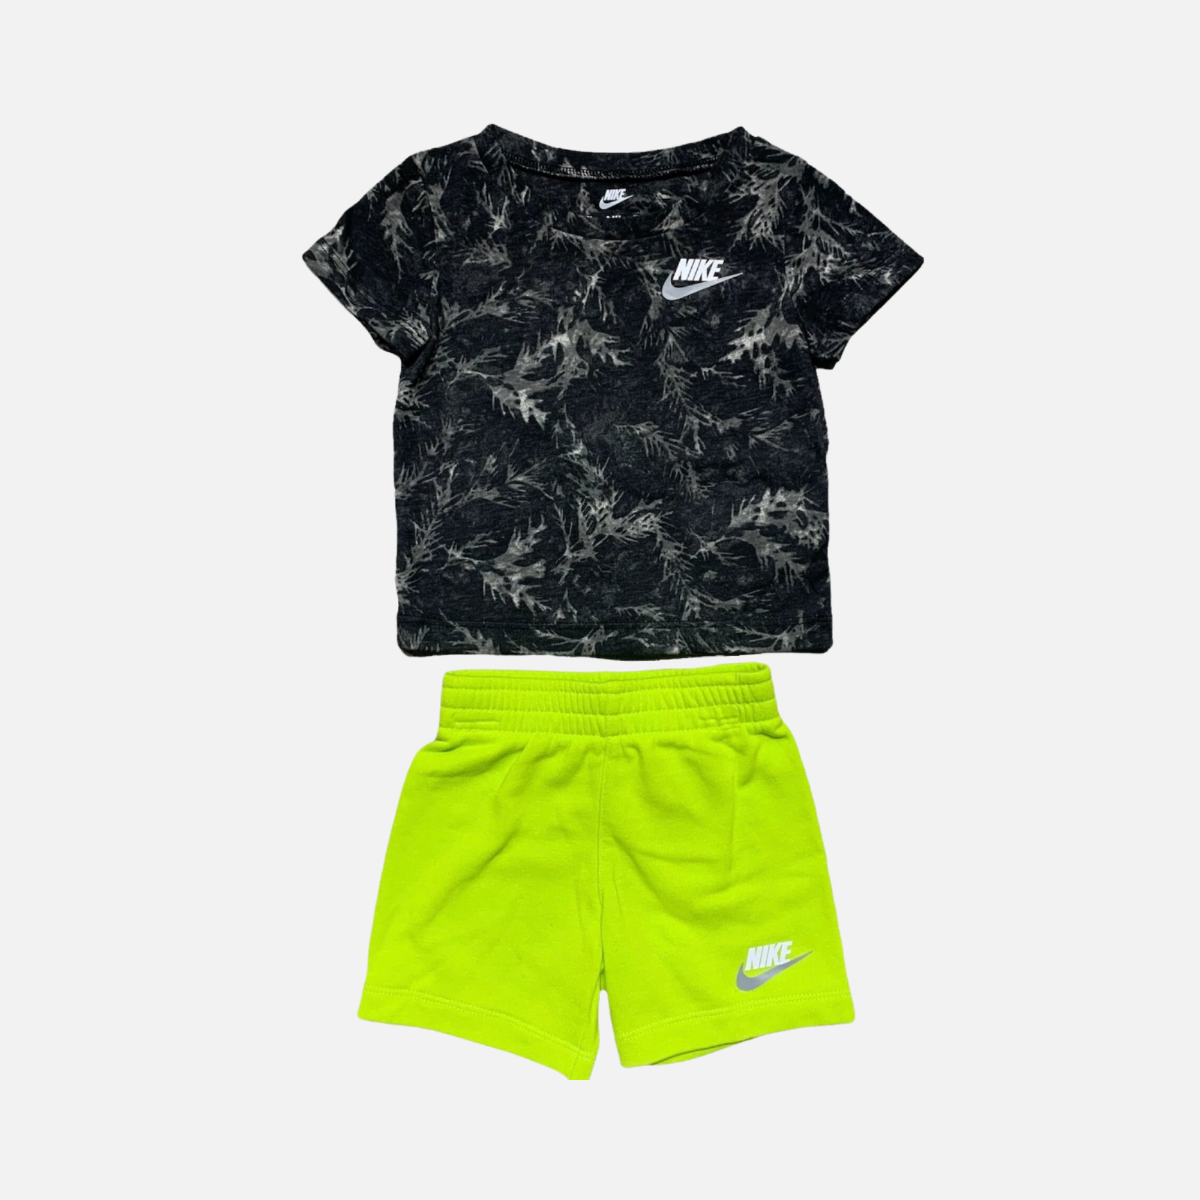 Nike Baby T-shirt/Shorts Set - Black/Green